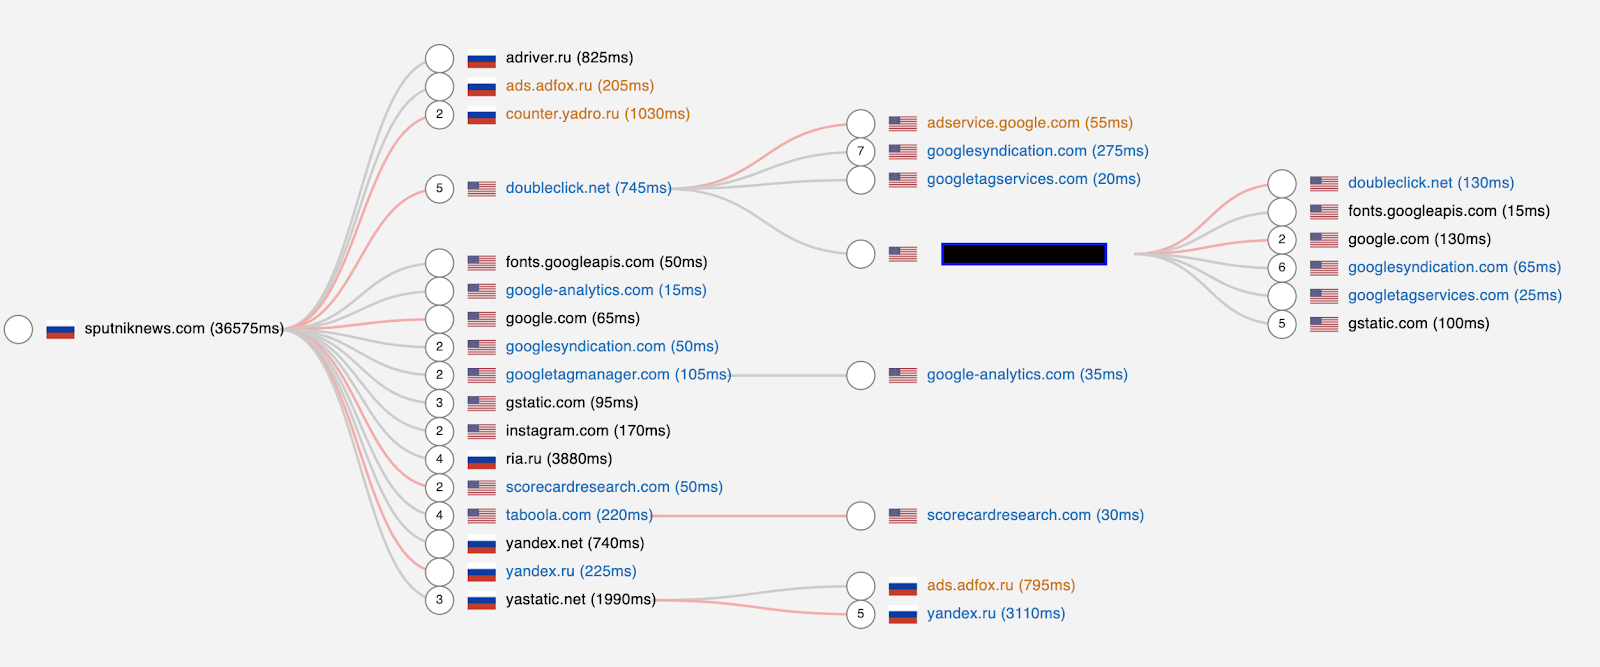 Analysis of ad javascript activity on Sputnik News using Fou Analytics